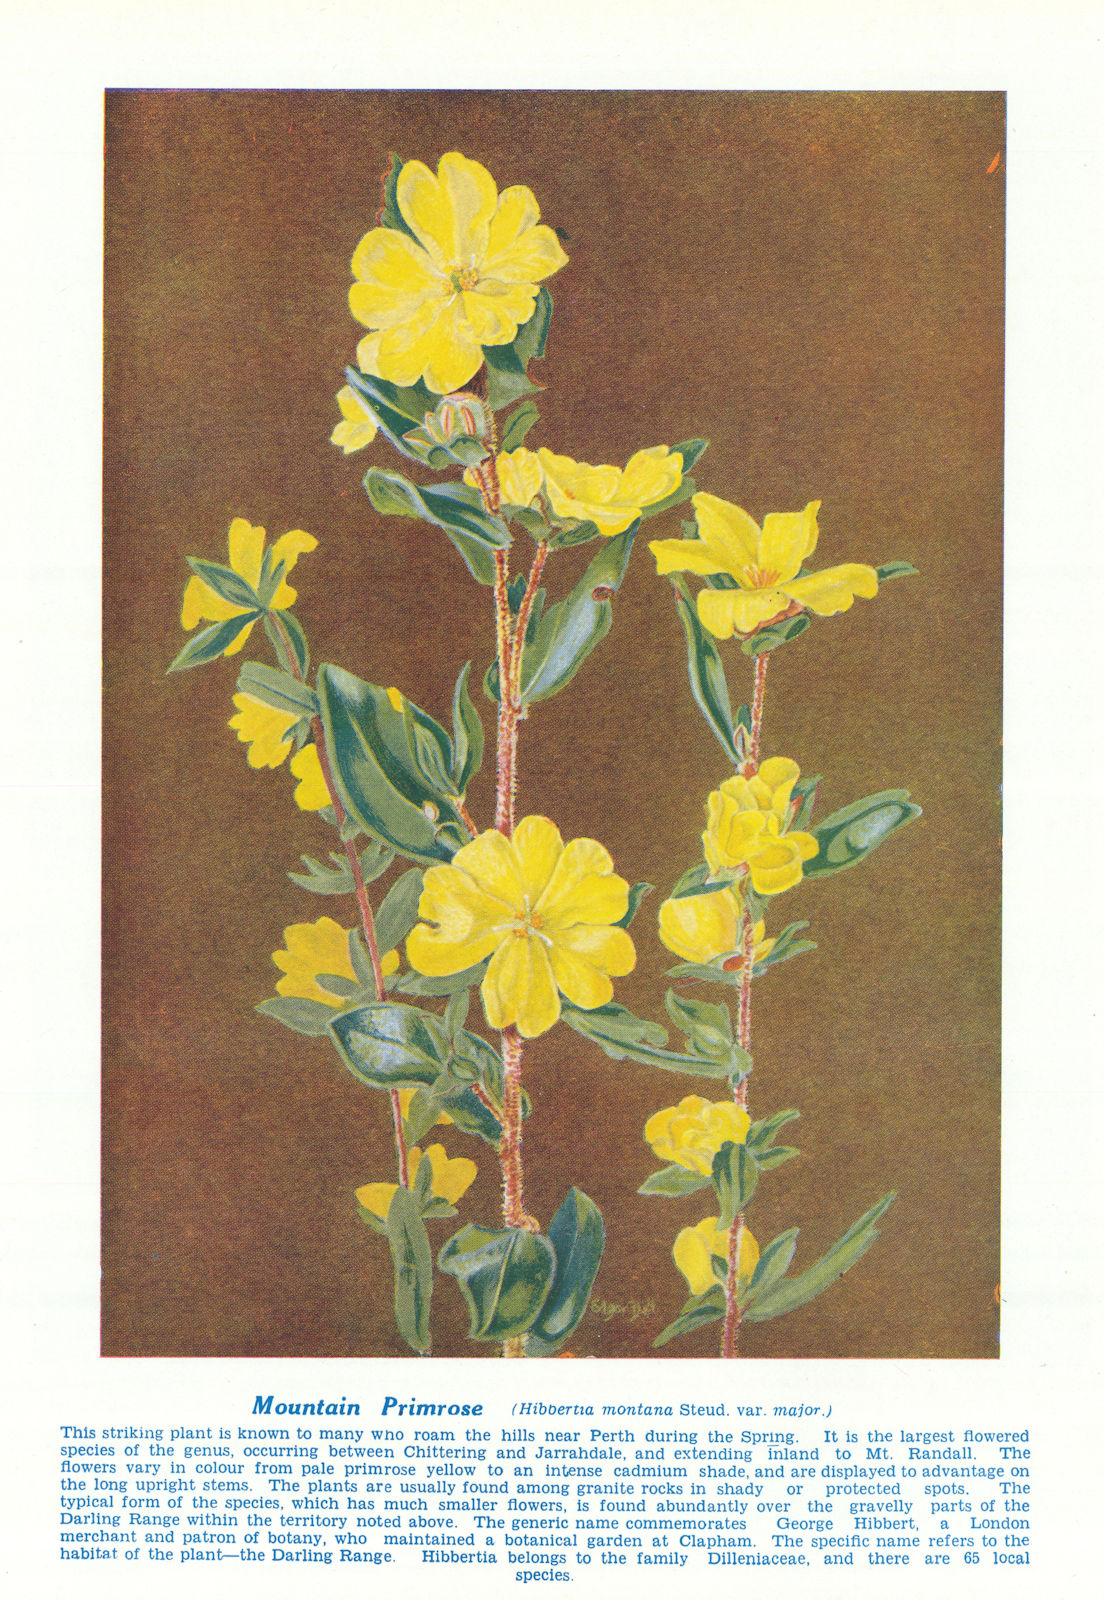 Mountain Primrose (Hibbertia montana). West Australian Wild Flowers 1950 print